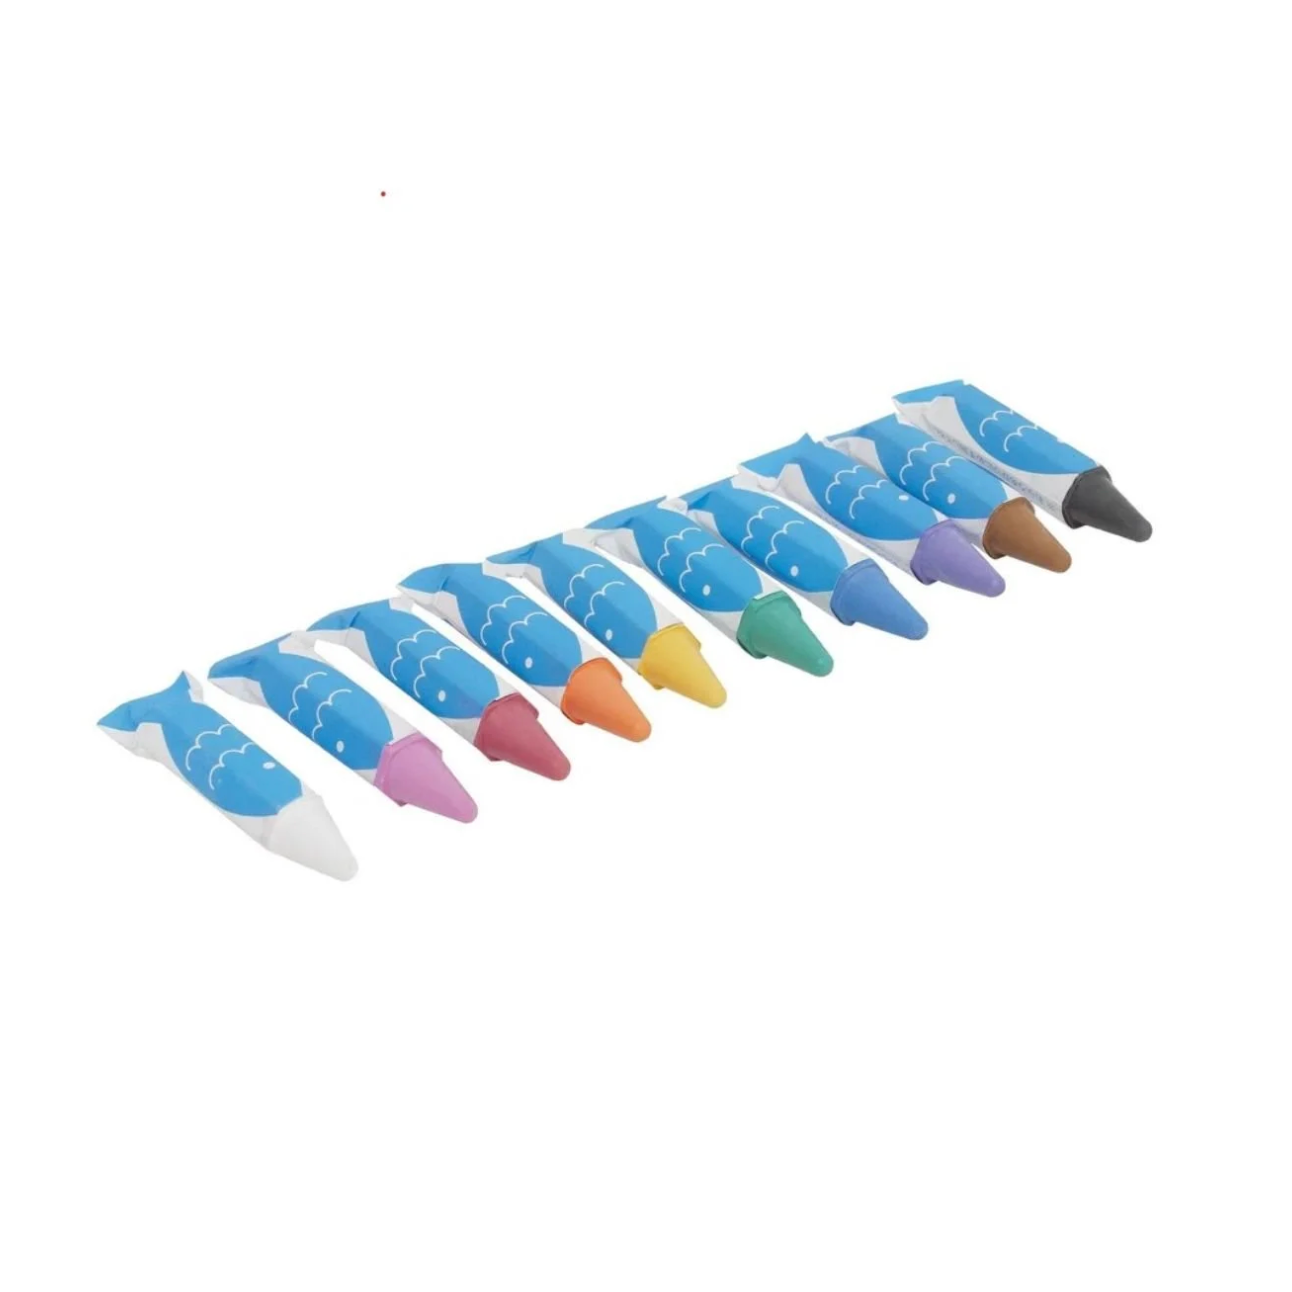 Kitpas - Bath Crayon Set - 10 Mixed Colours